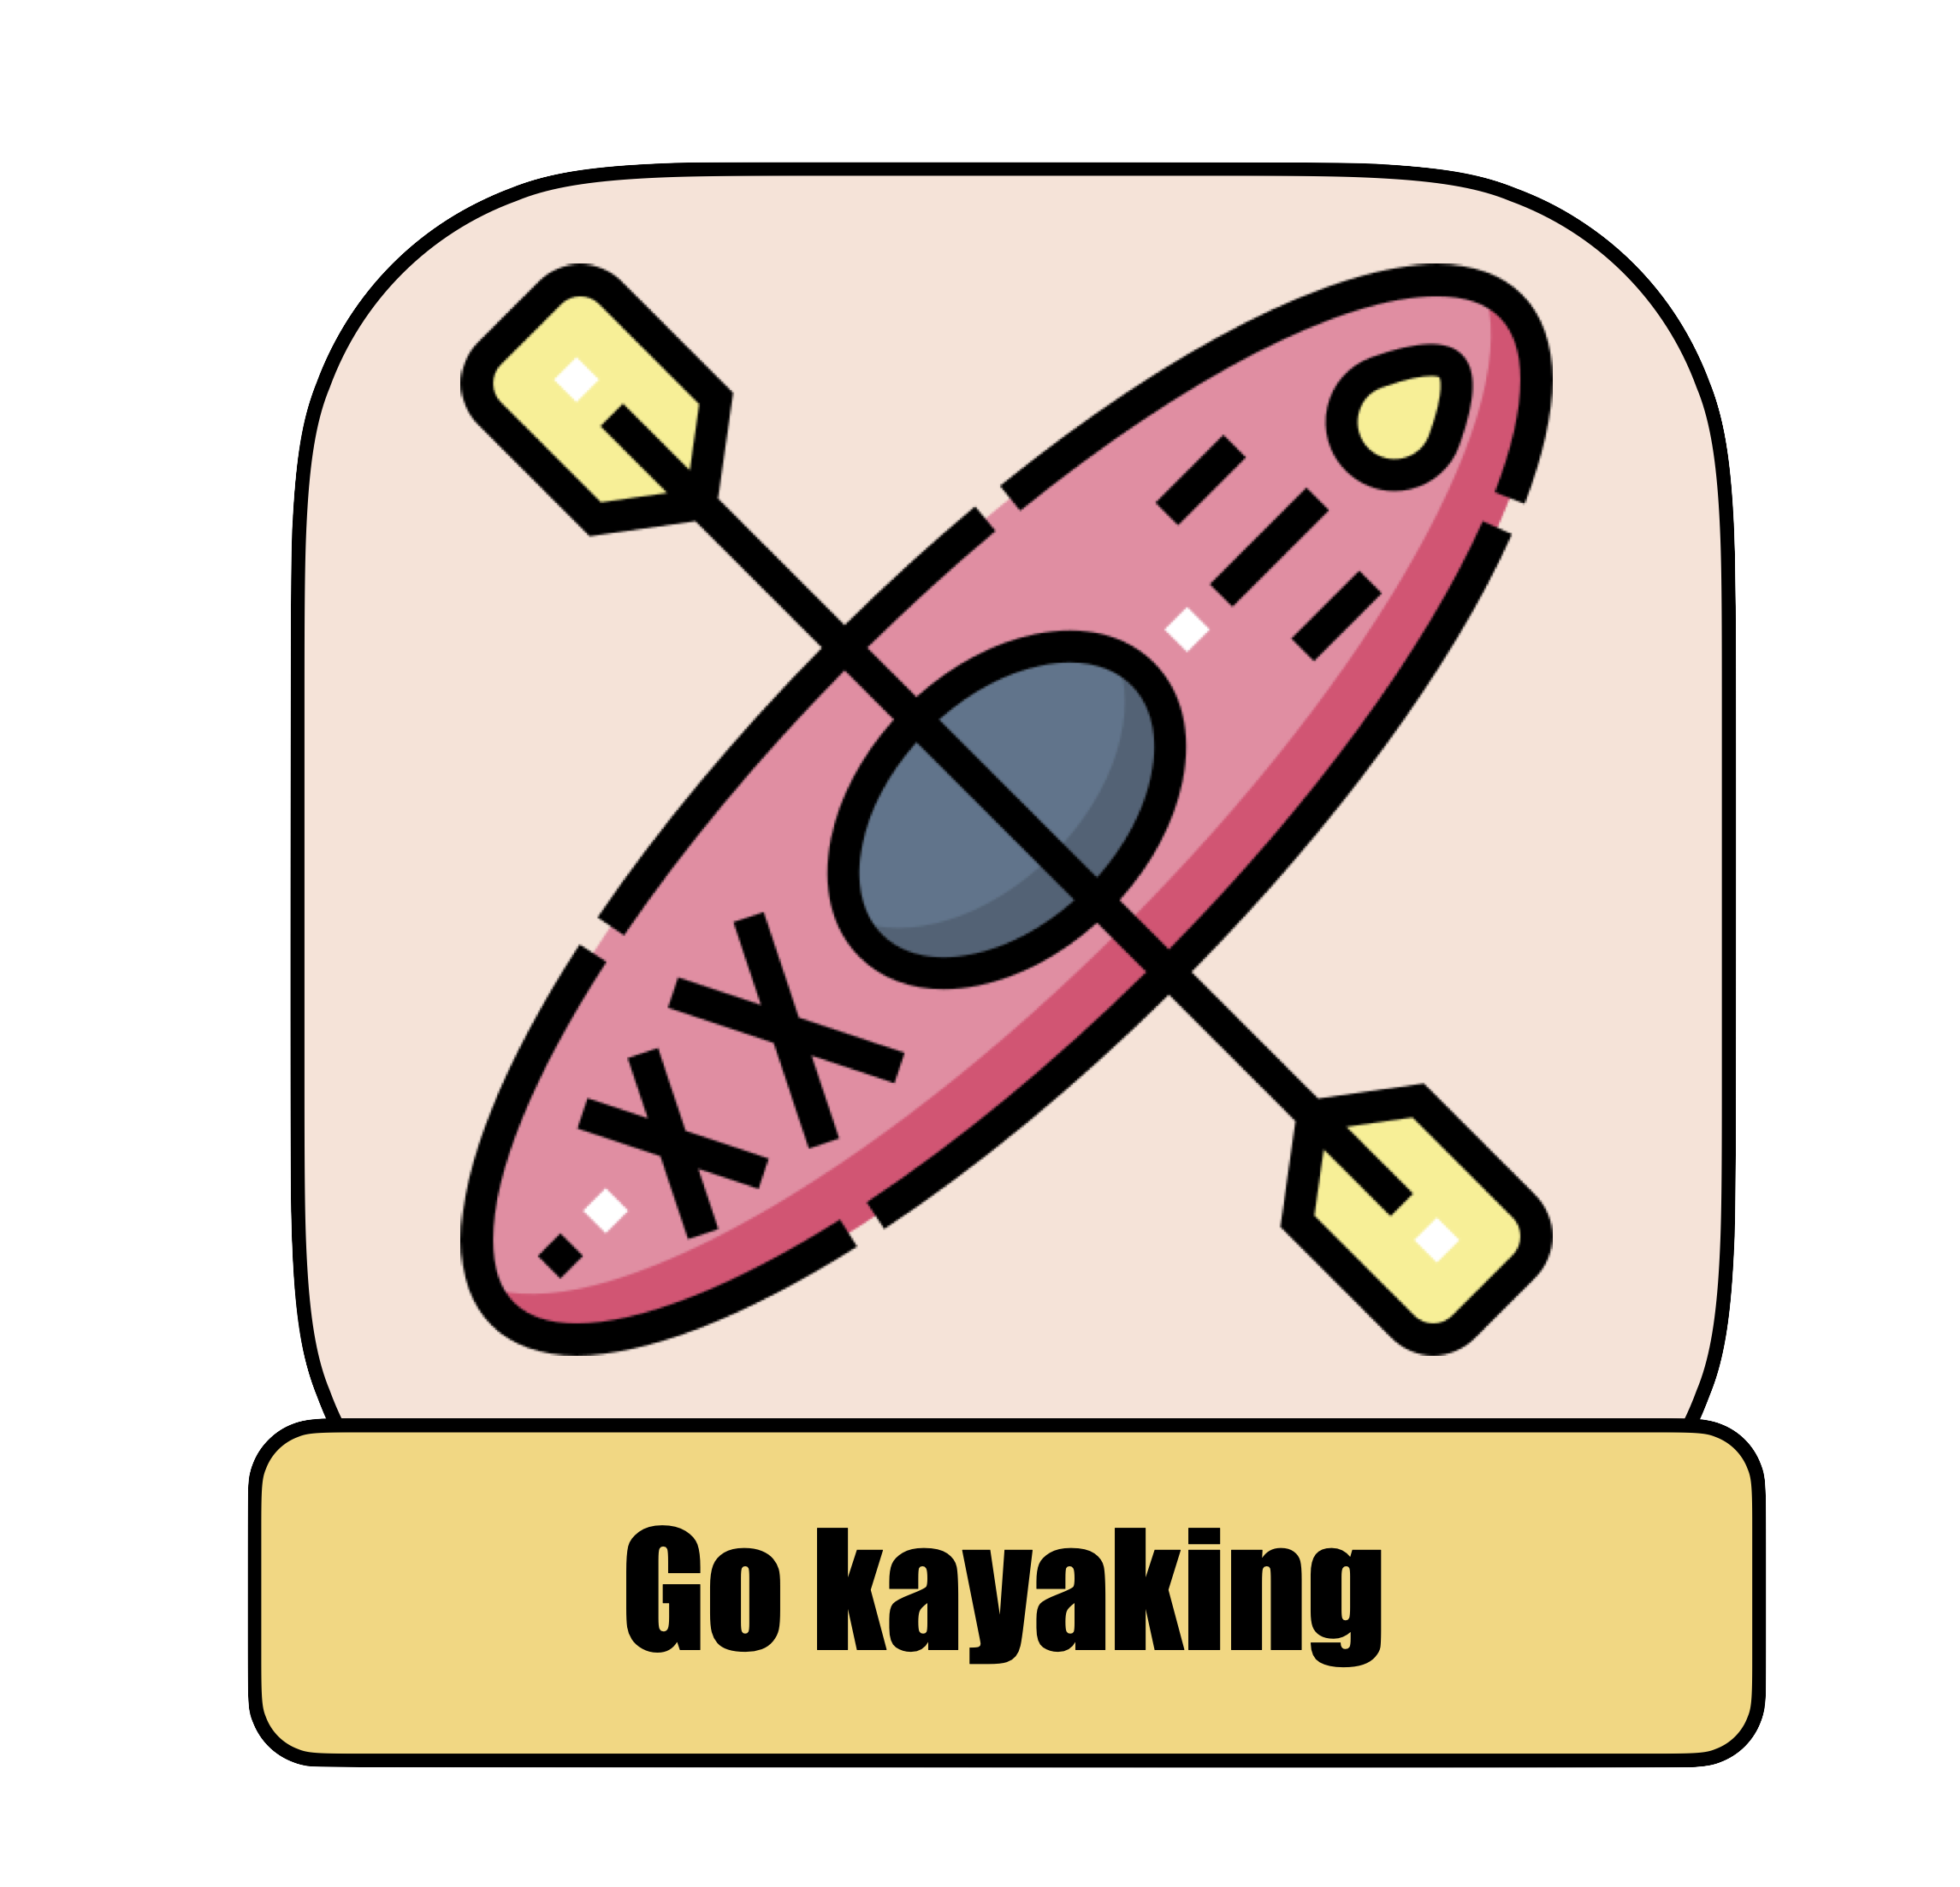 Go kayaking